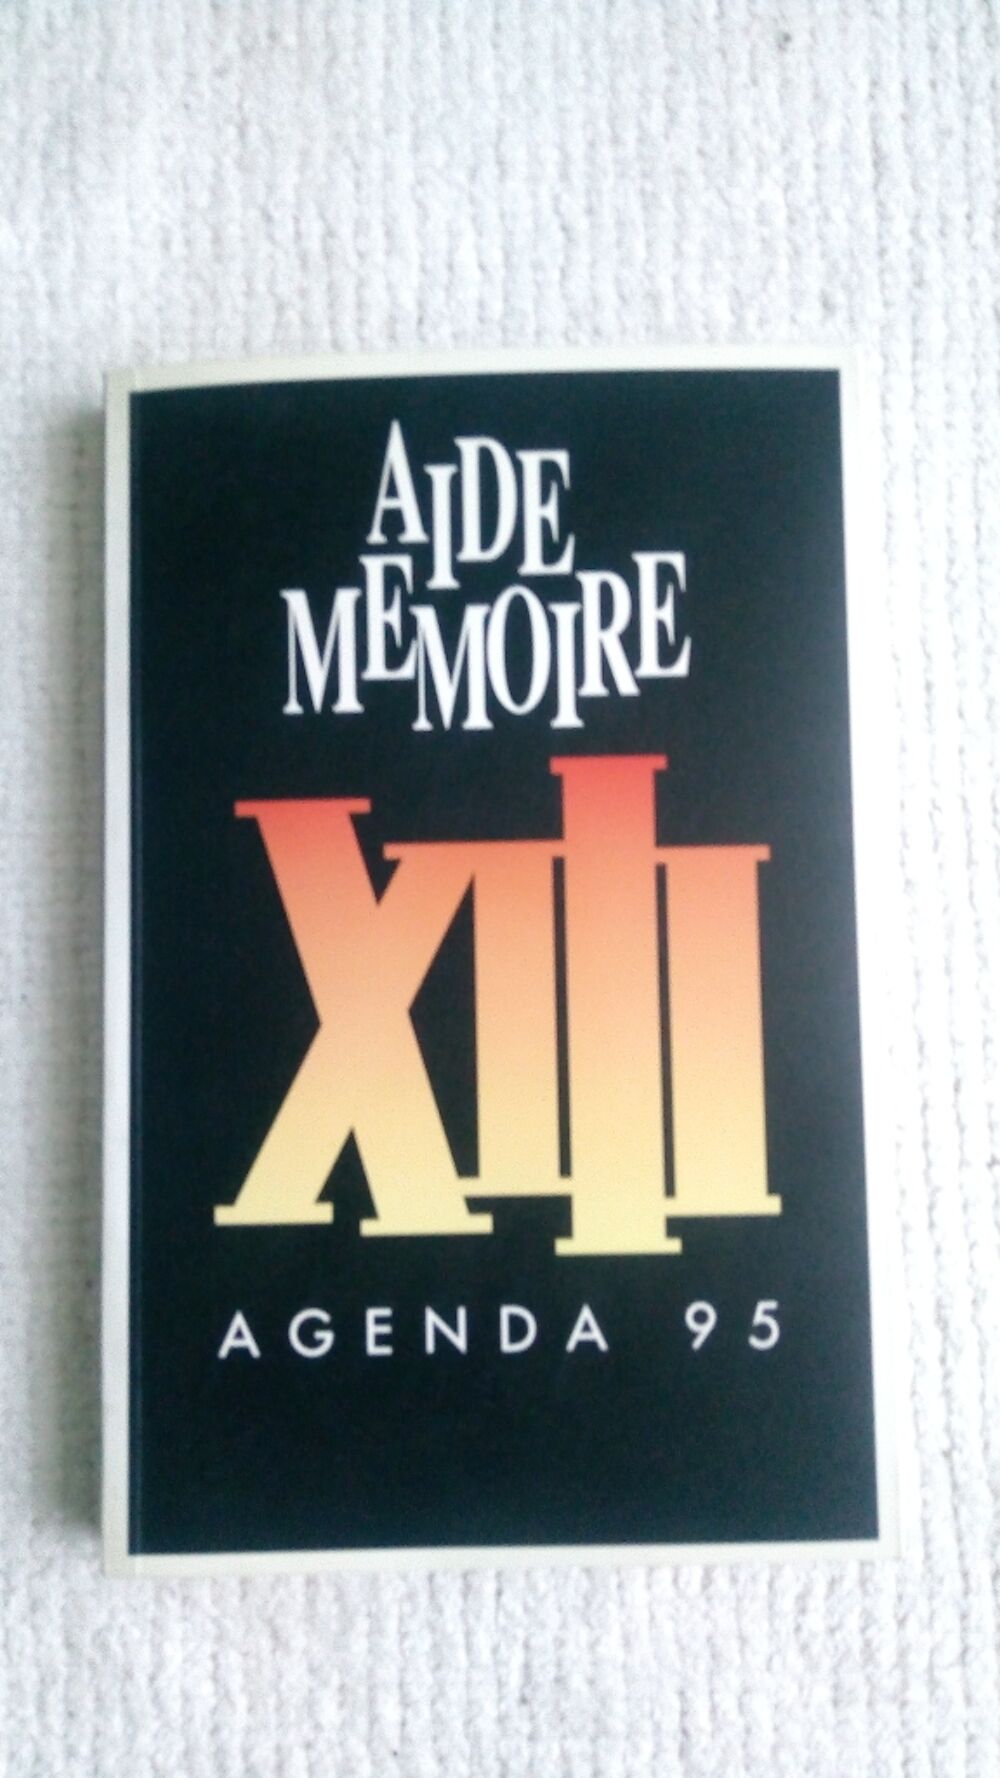 Agenda XIII 1995 